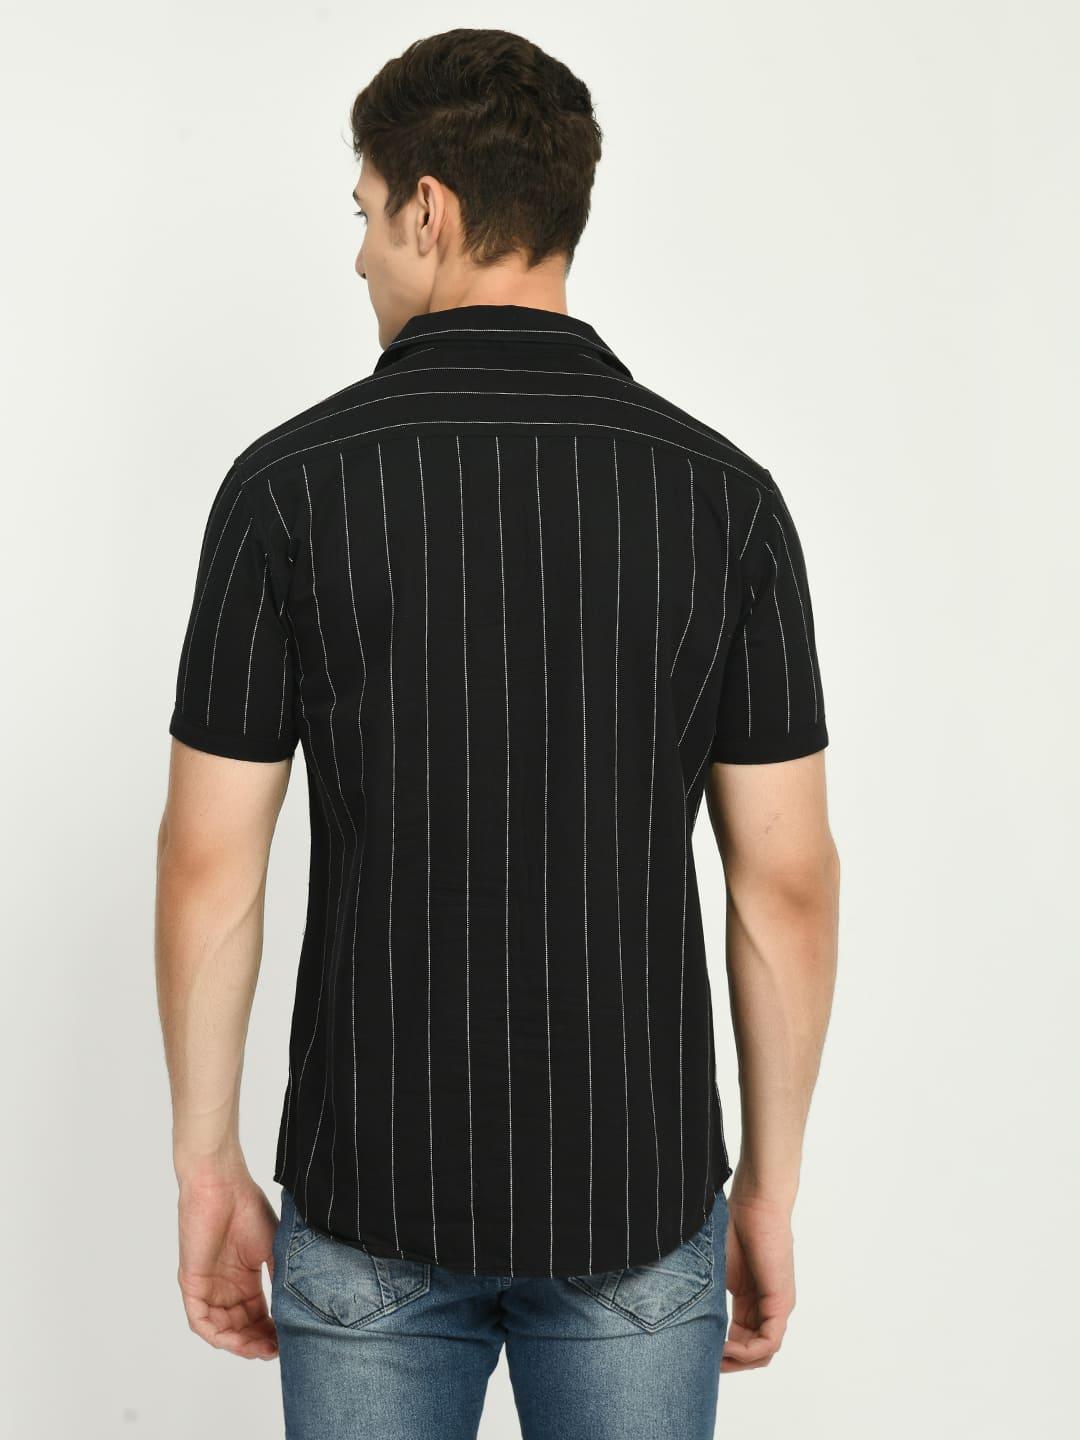 Men's Black Stripes Cotton Spread Collar Shirt